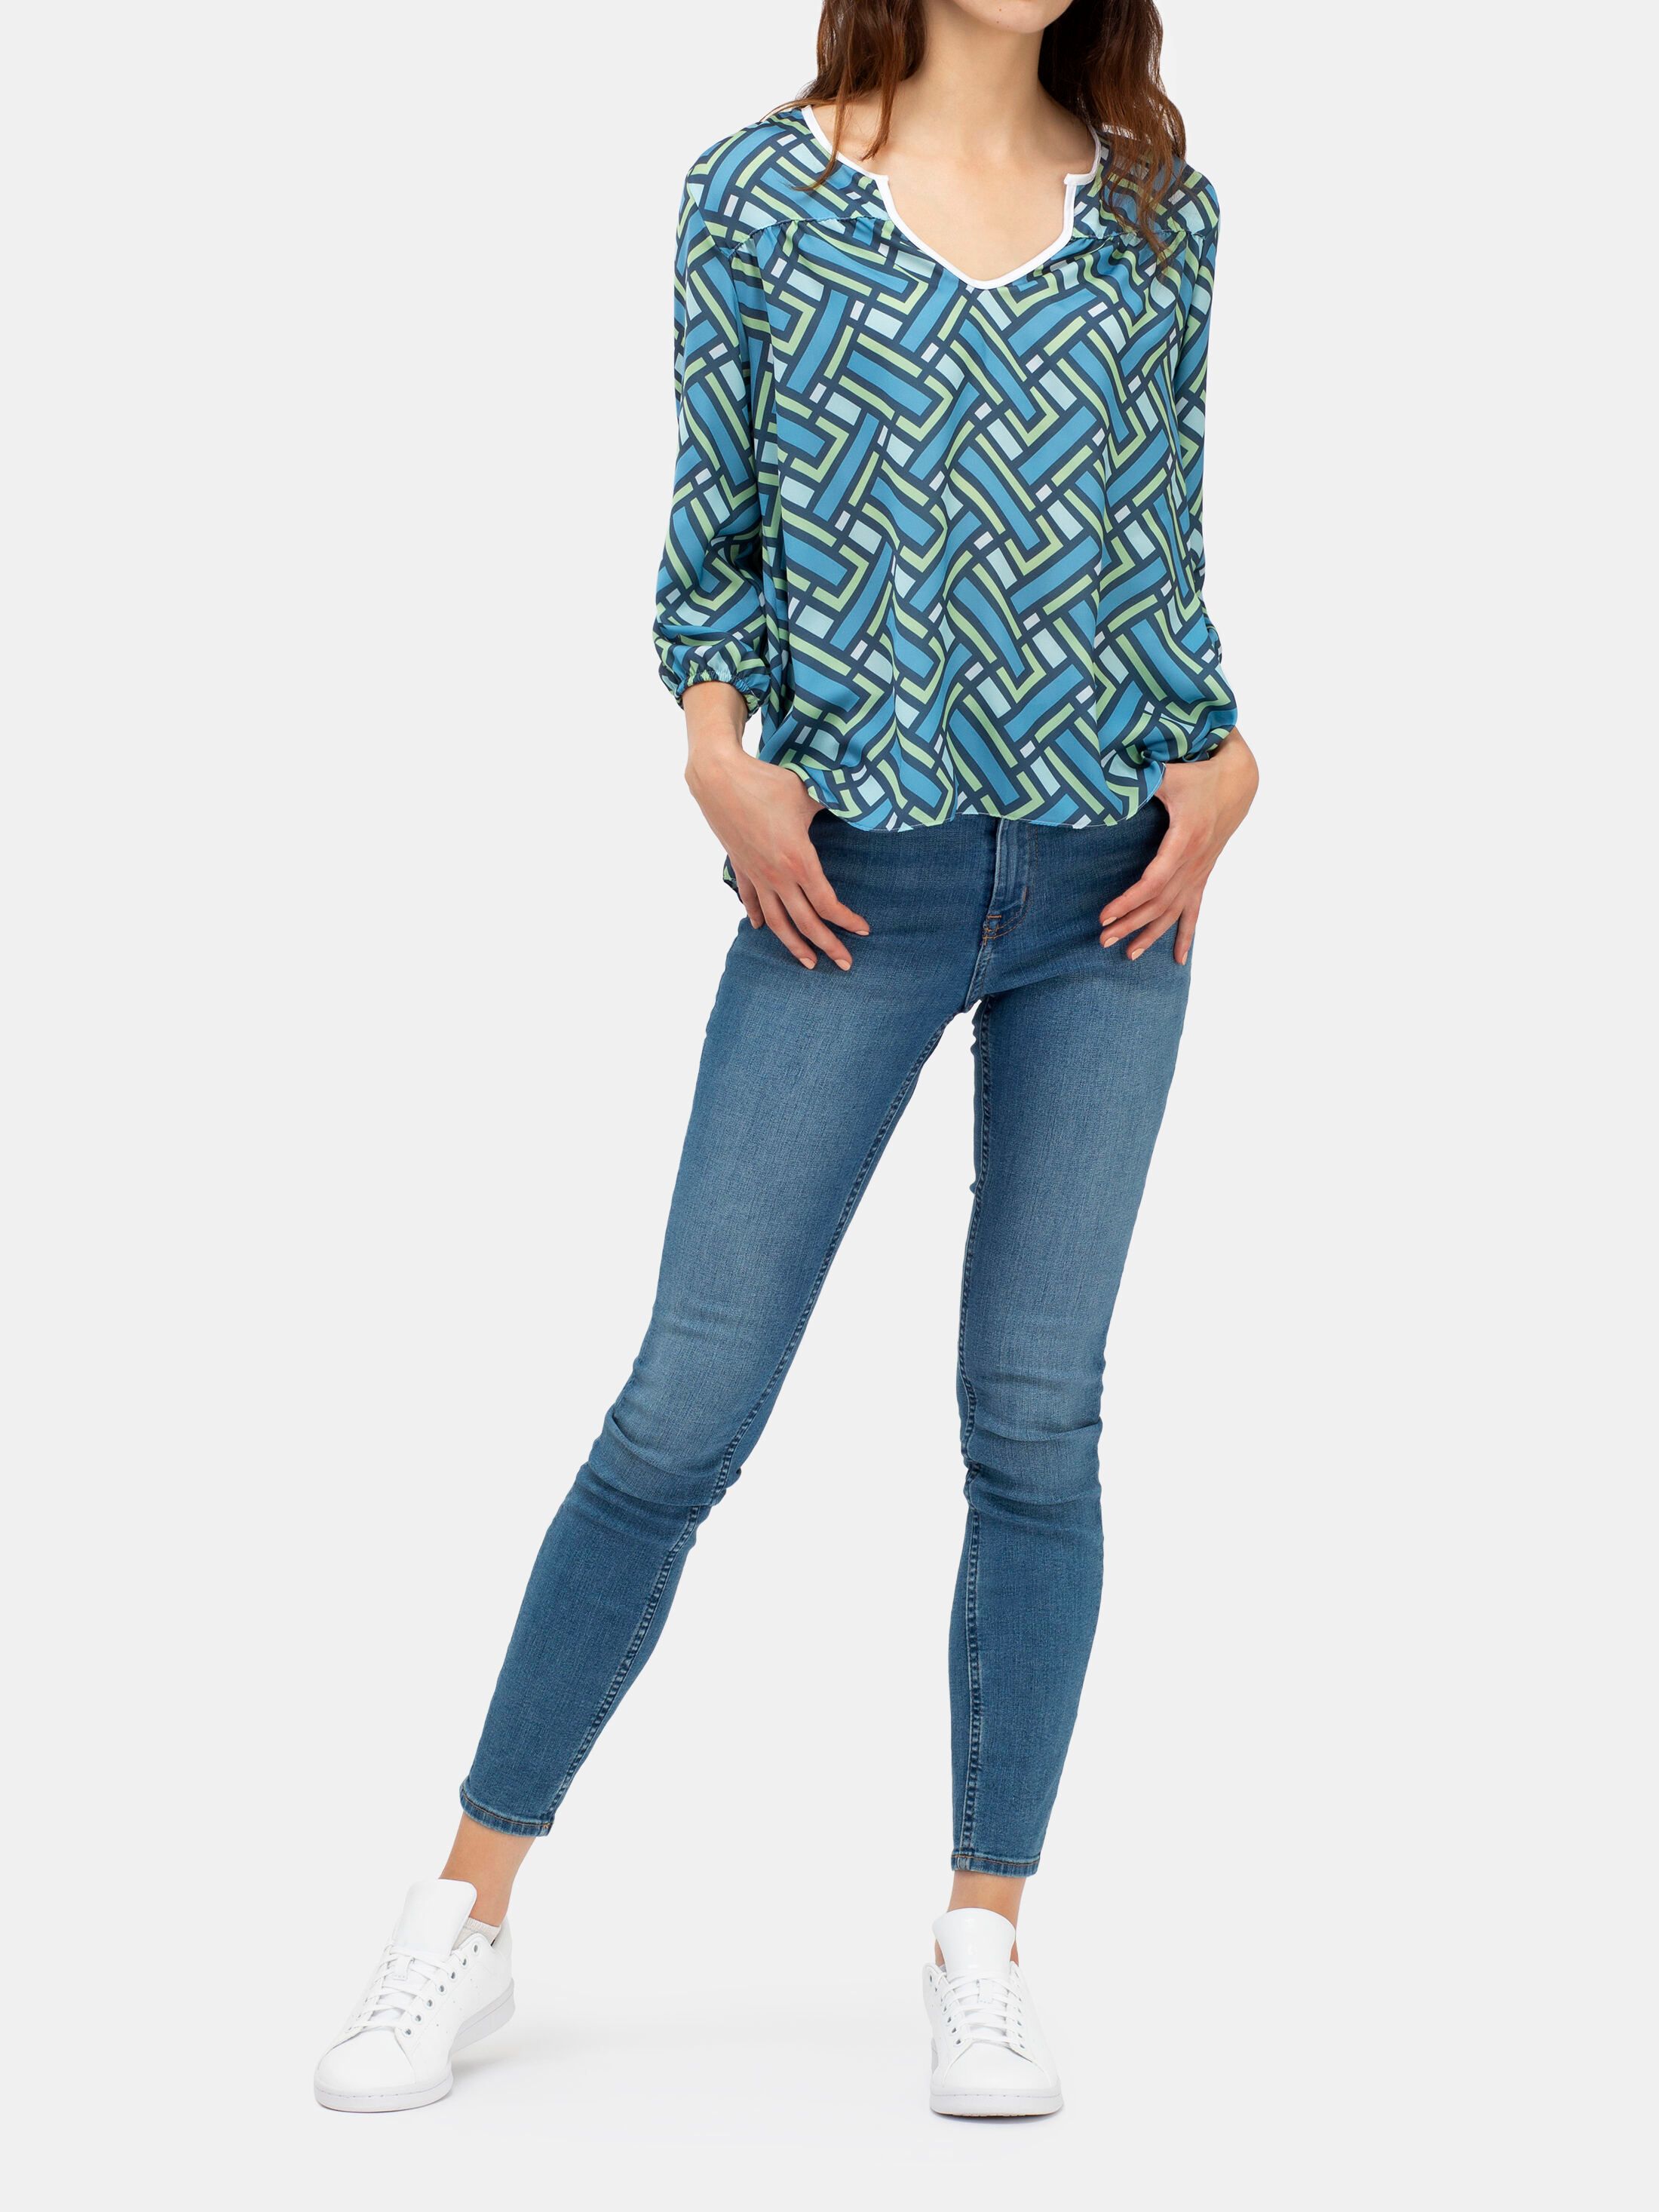 customized blouse details